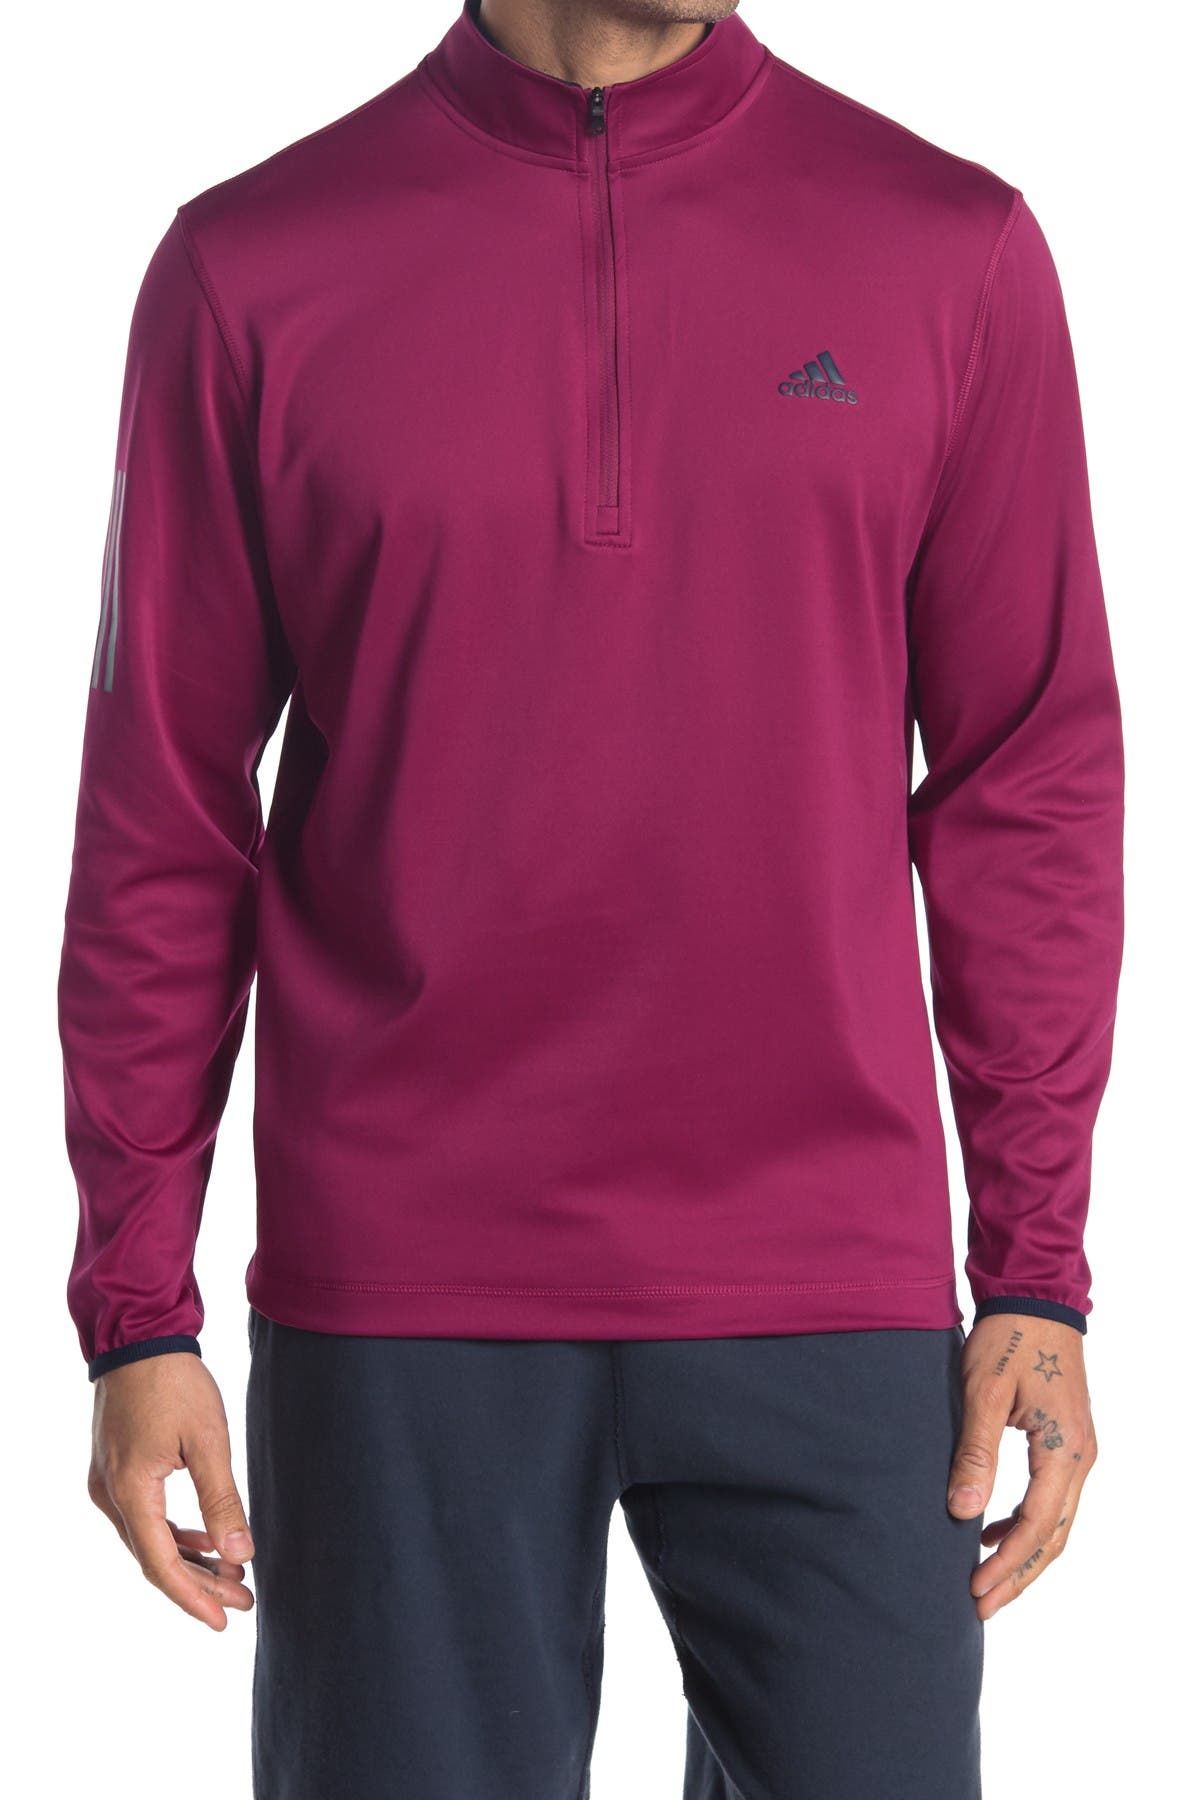 Adidas Golf 3 Stripes Midweight Layering Sweatshirt In Medium Pink5